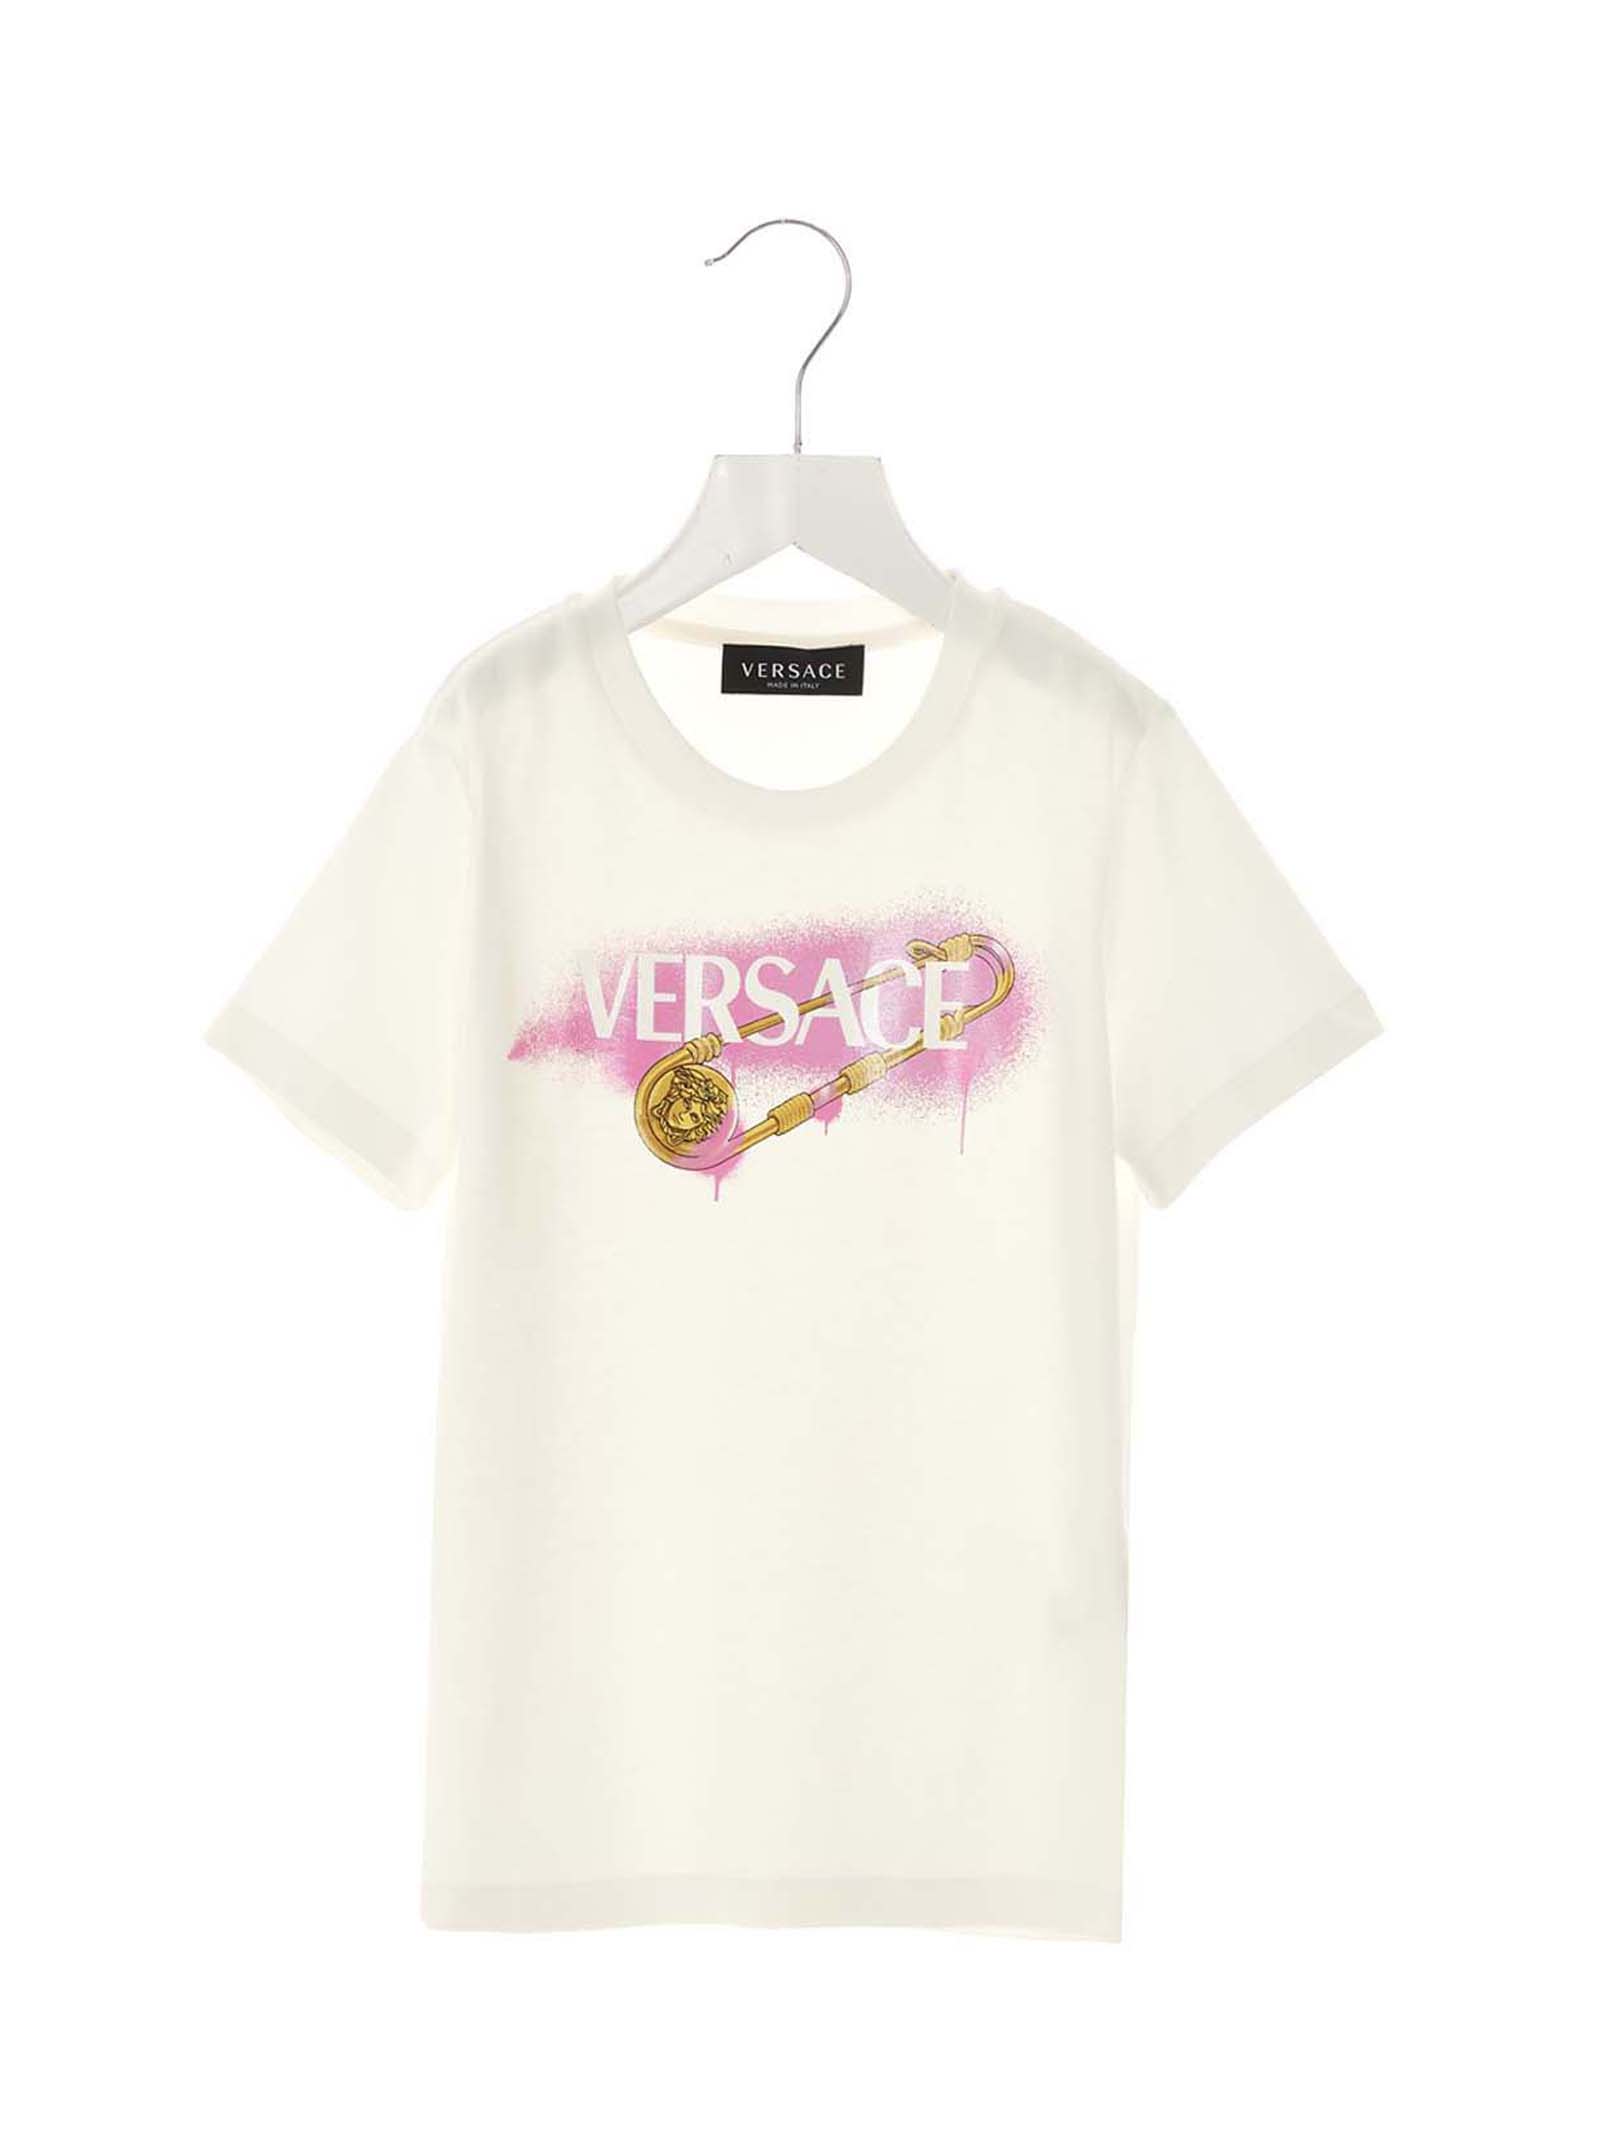 Versace logo Pin T-shirt